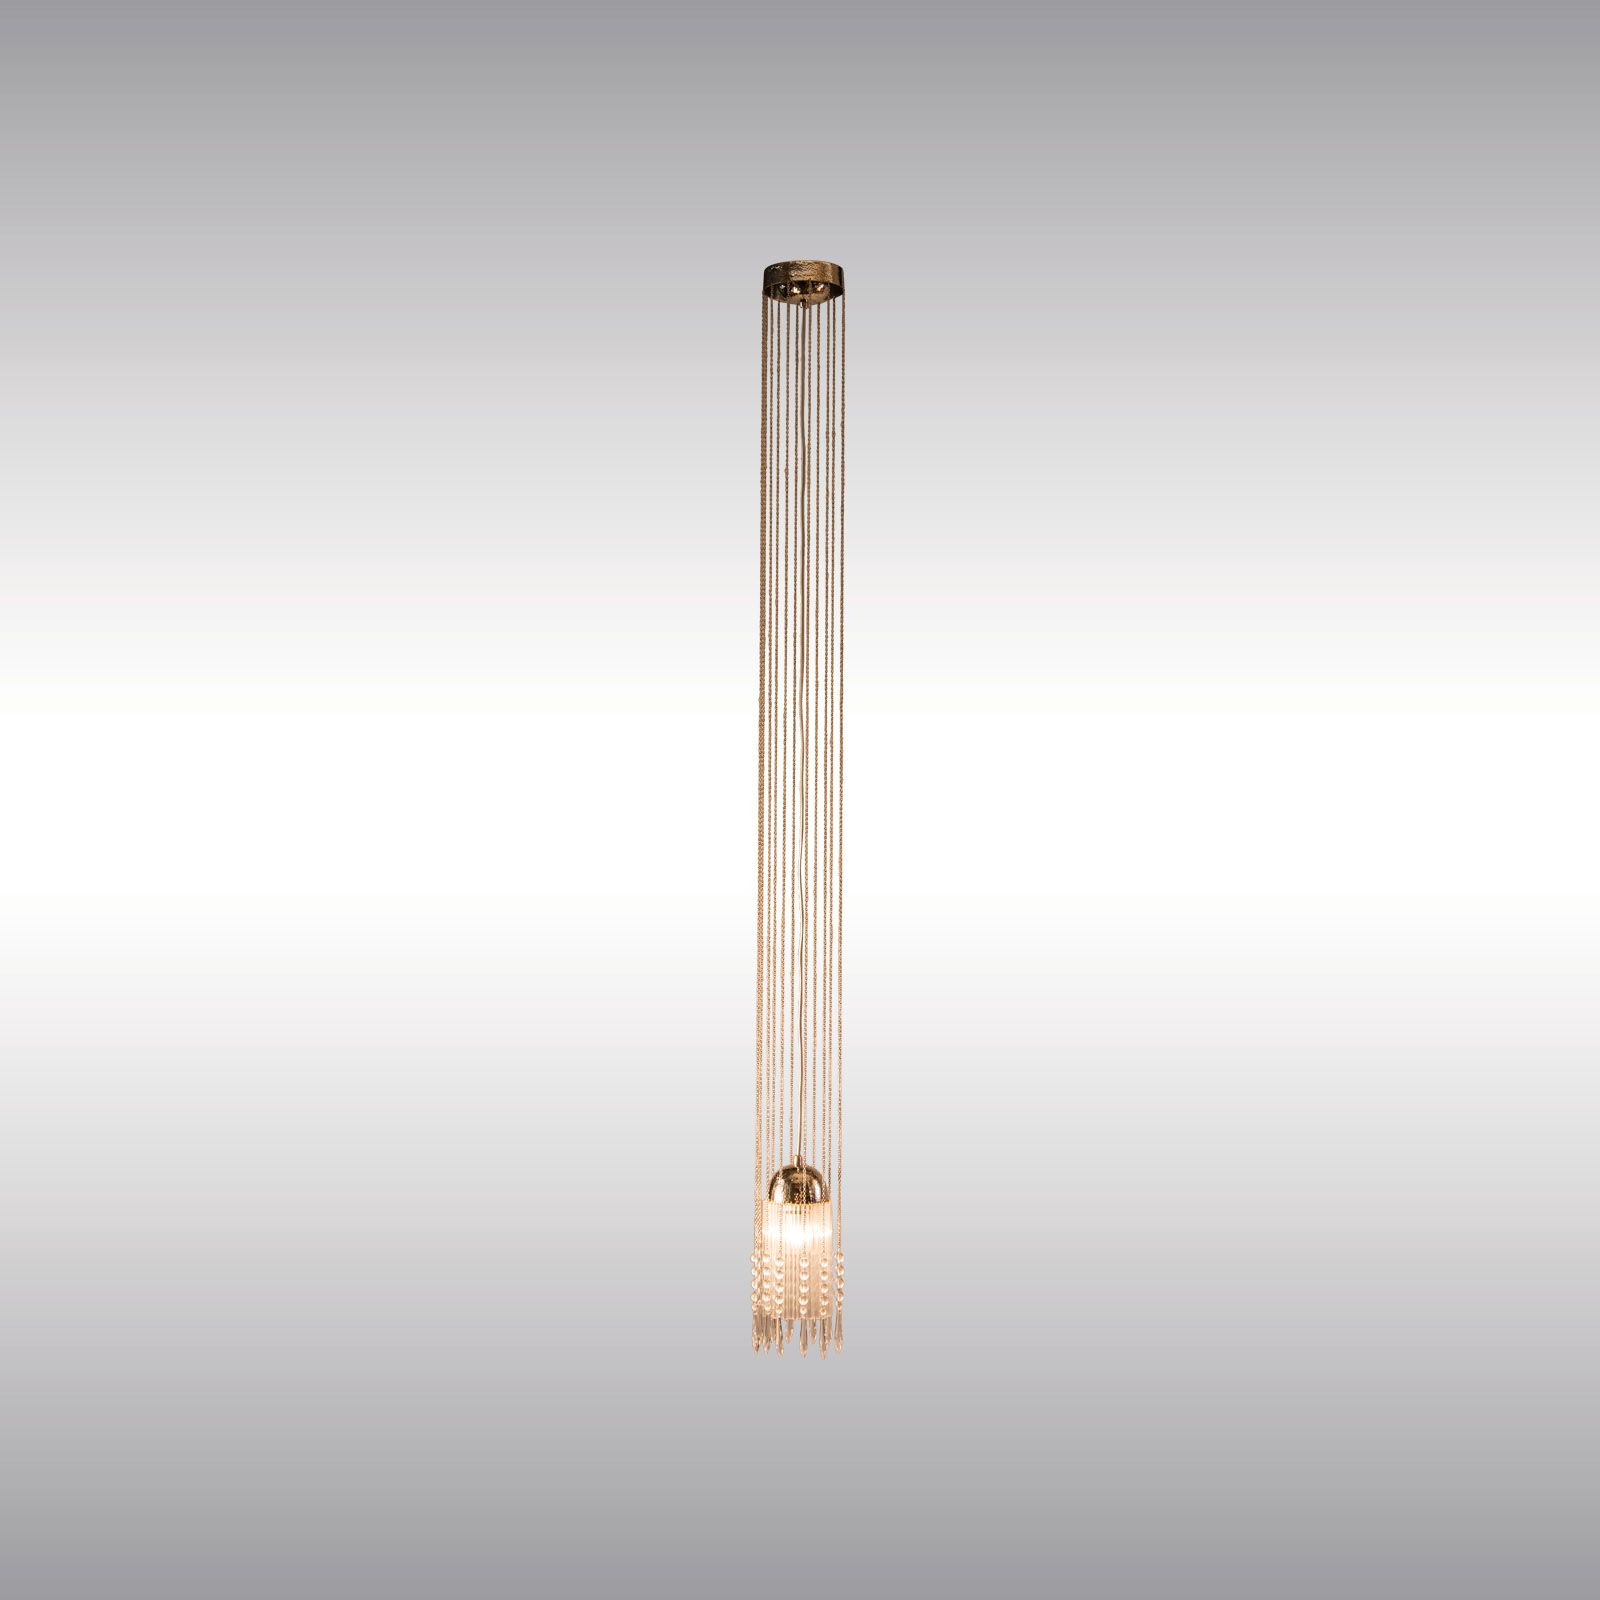 WOKA LAMPS VIENNA - OrderNr.: 21626|Neustiftgasserl - Design: Josef Hoffmann